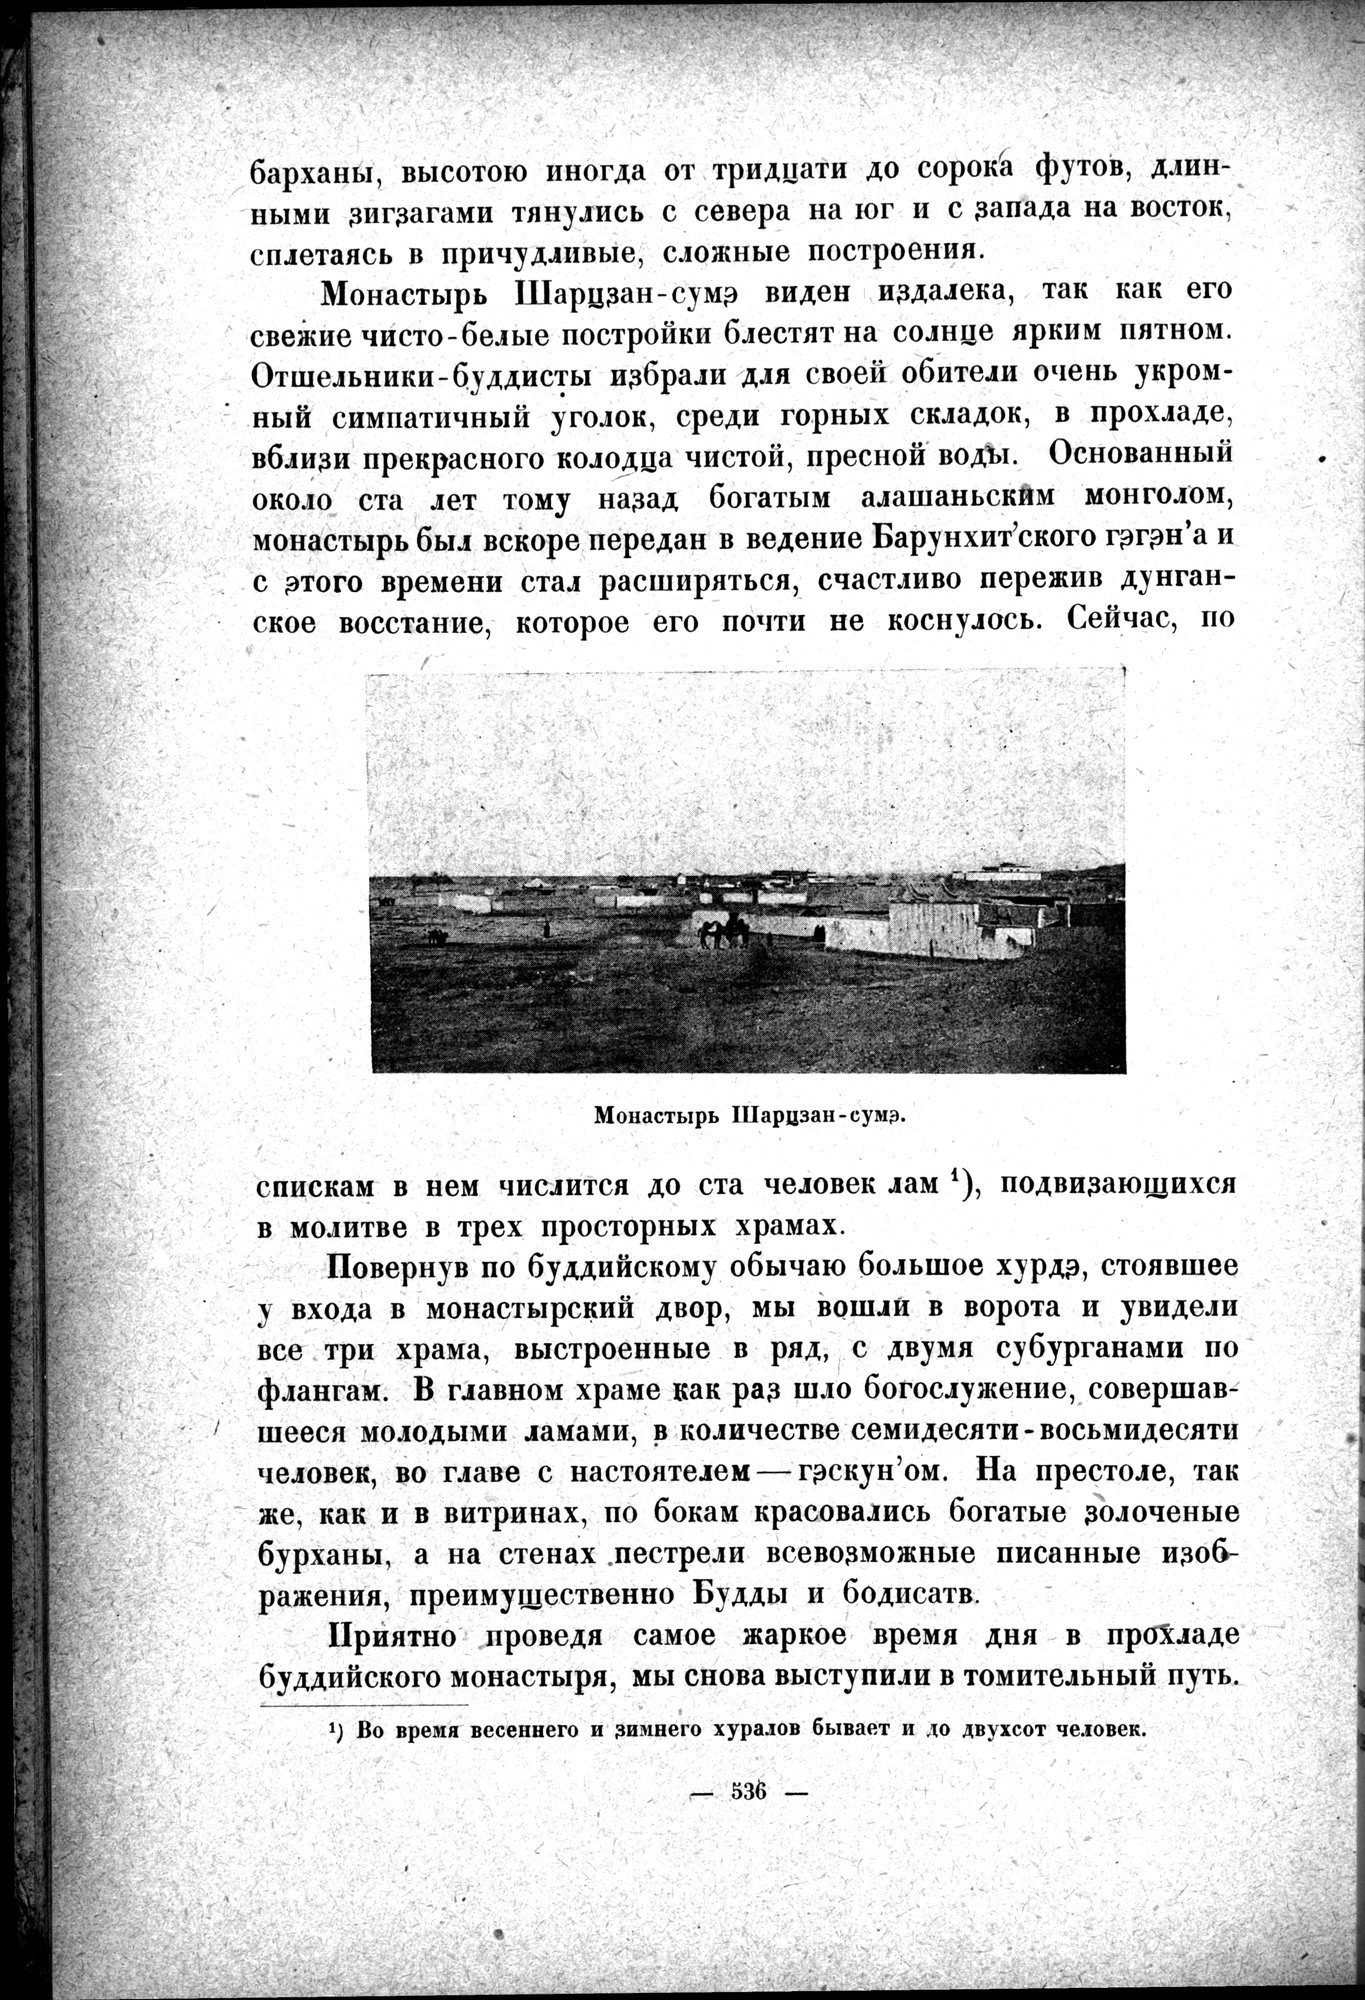 Mongoliya i Amdo i mertby gorod Khara-Khoto : vol.1 / Page 620 (Grayscale High Resolution Image)